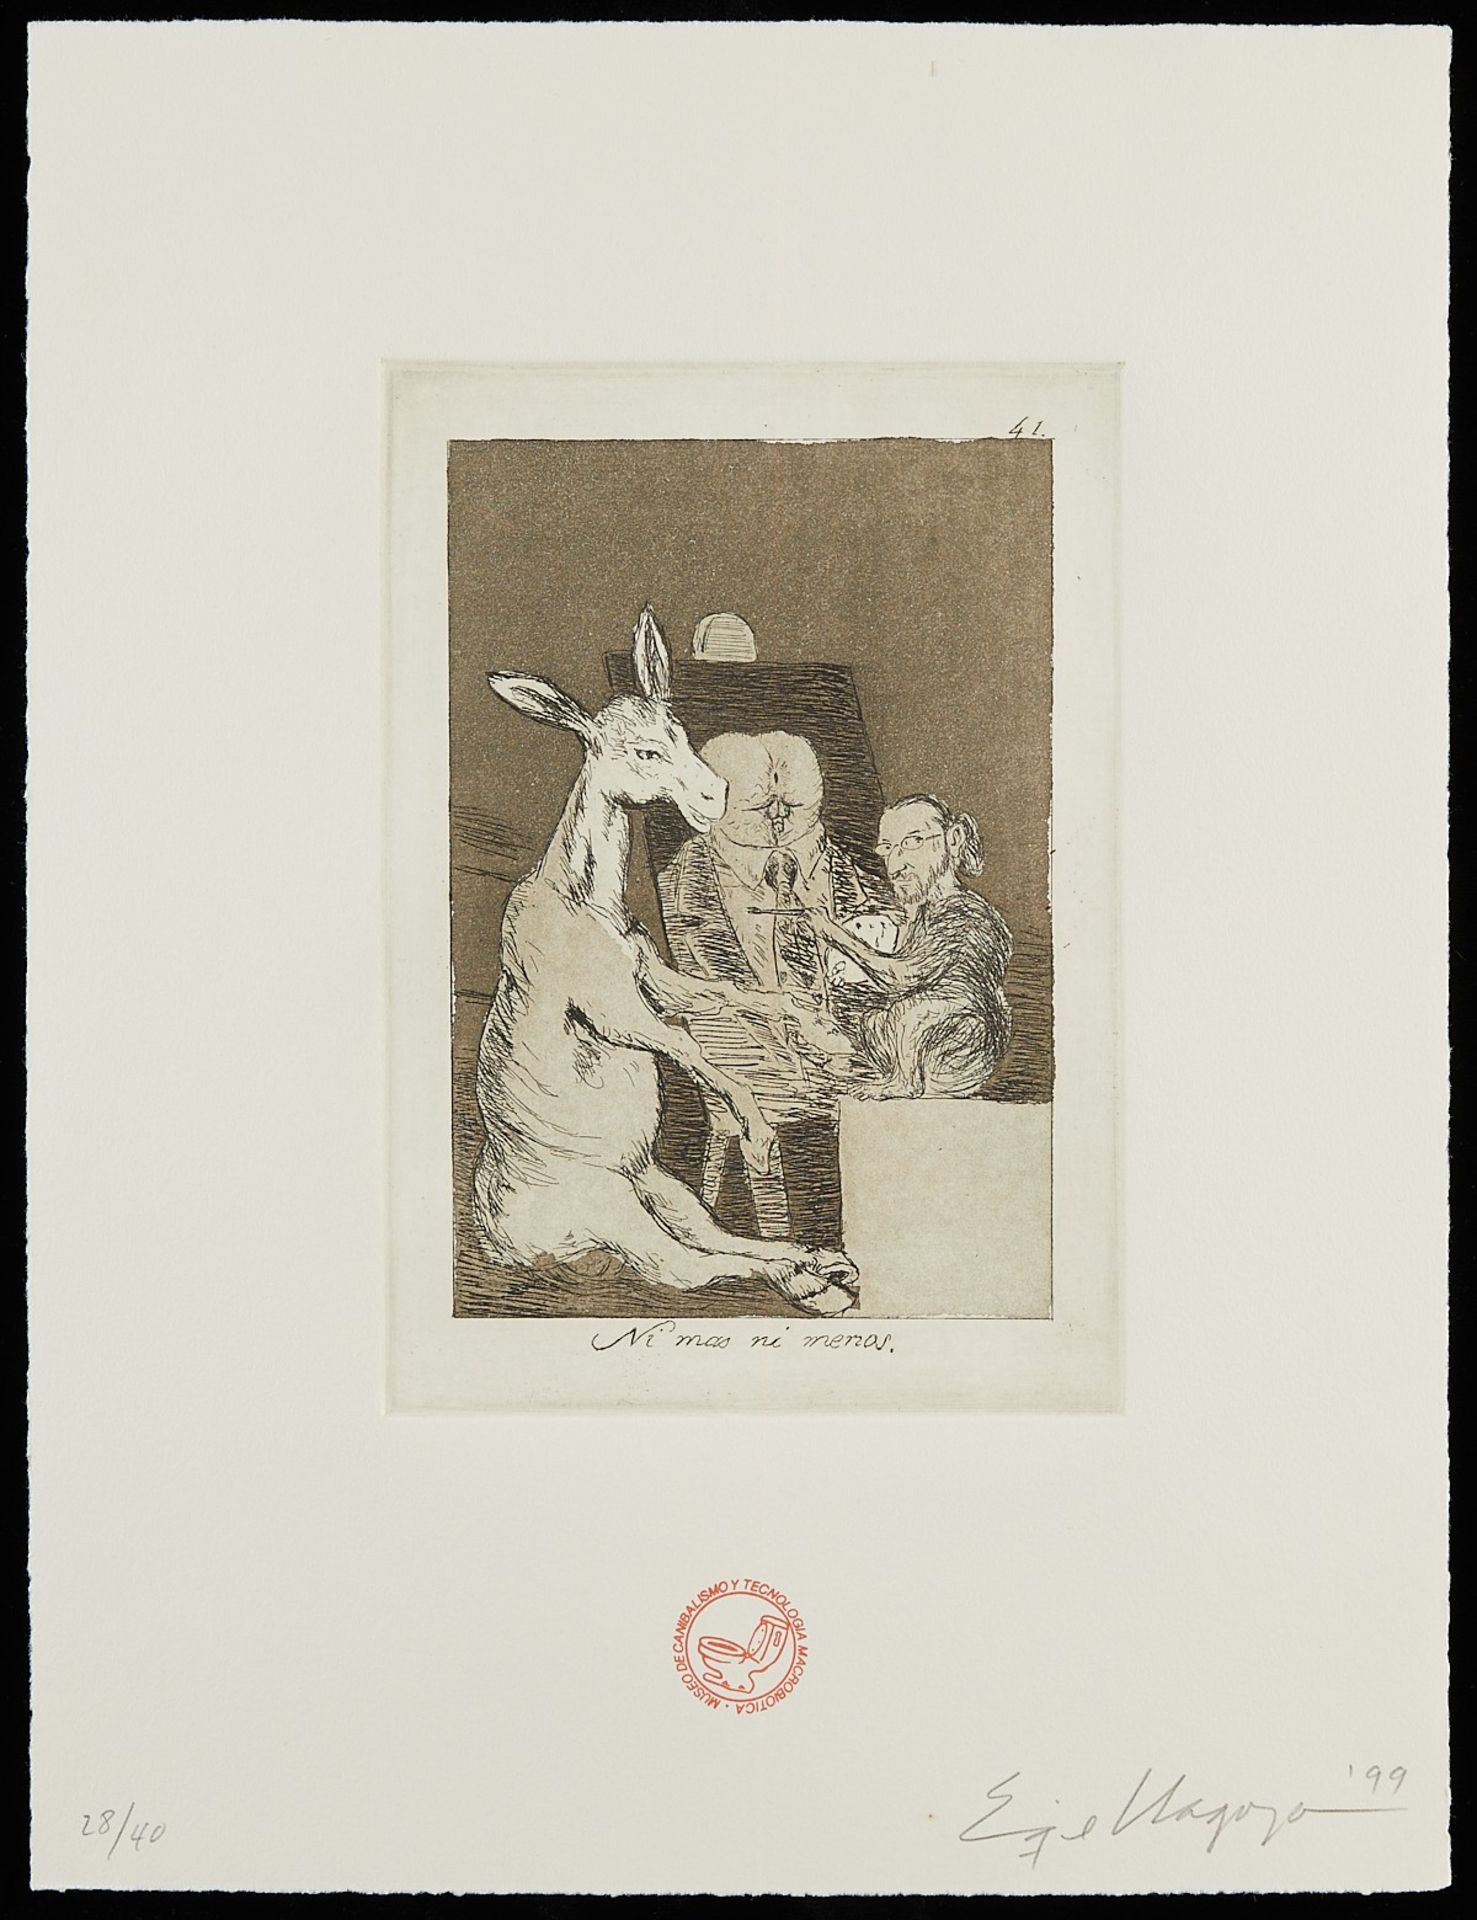 Grp: 8 Chagoya "Return To Goya's Caprichos" Suite - Image 20 of 40